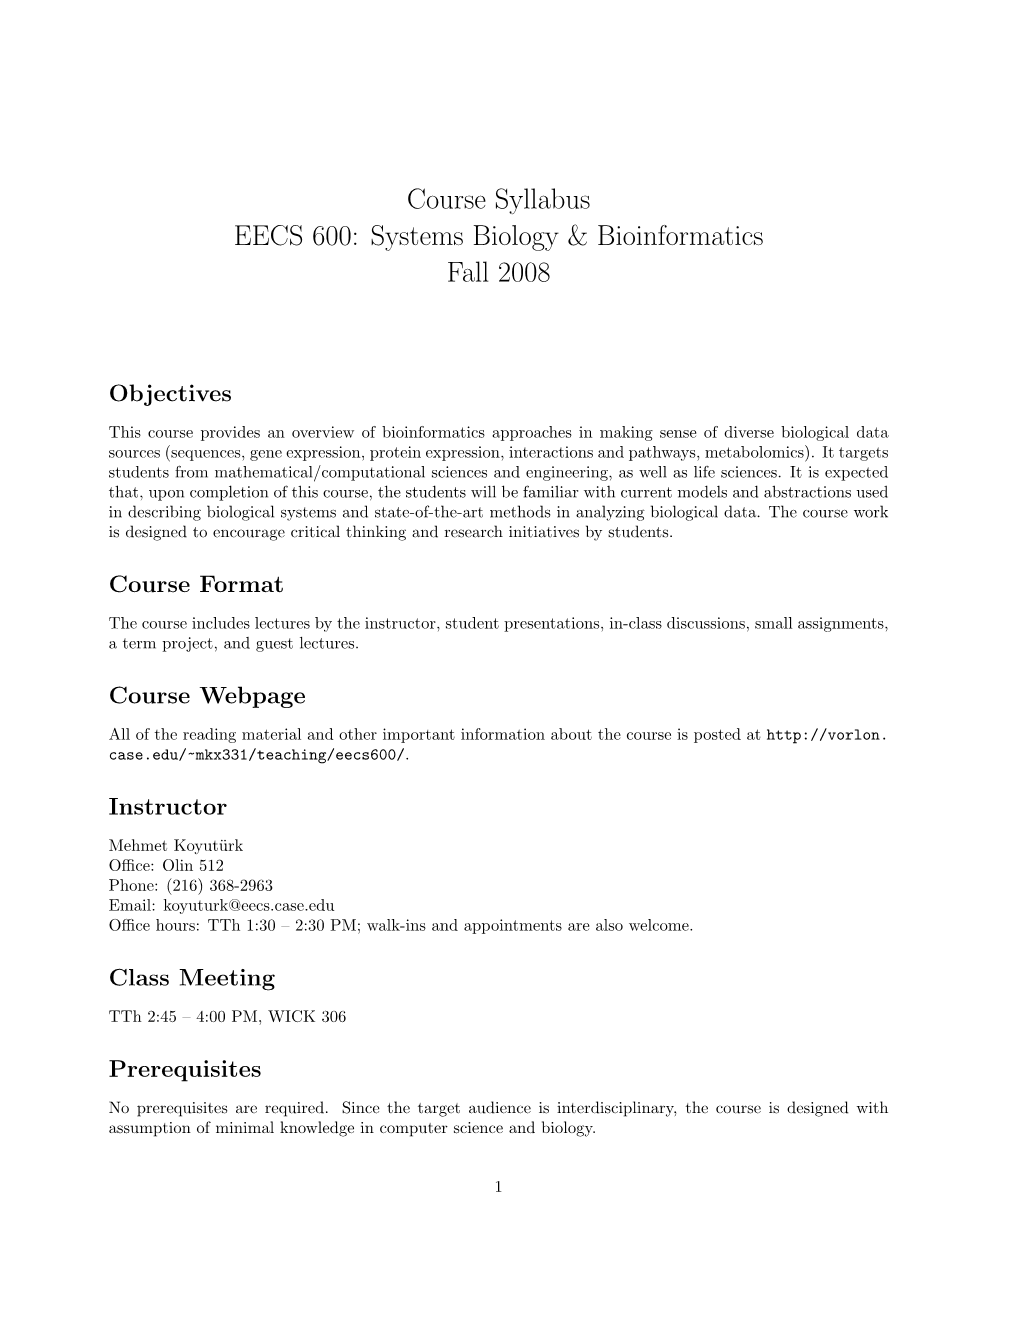 Course Syllabus EECS 600: Systems Biology & Bioinformatics Fall 2008